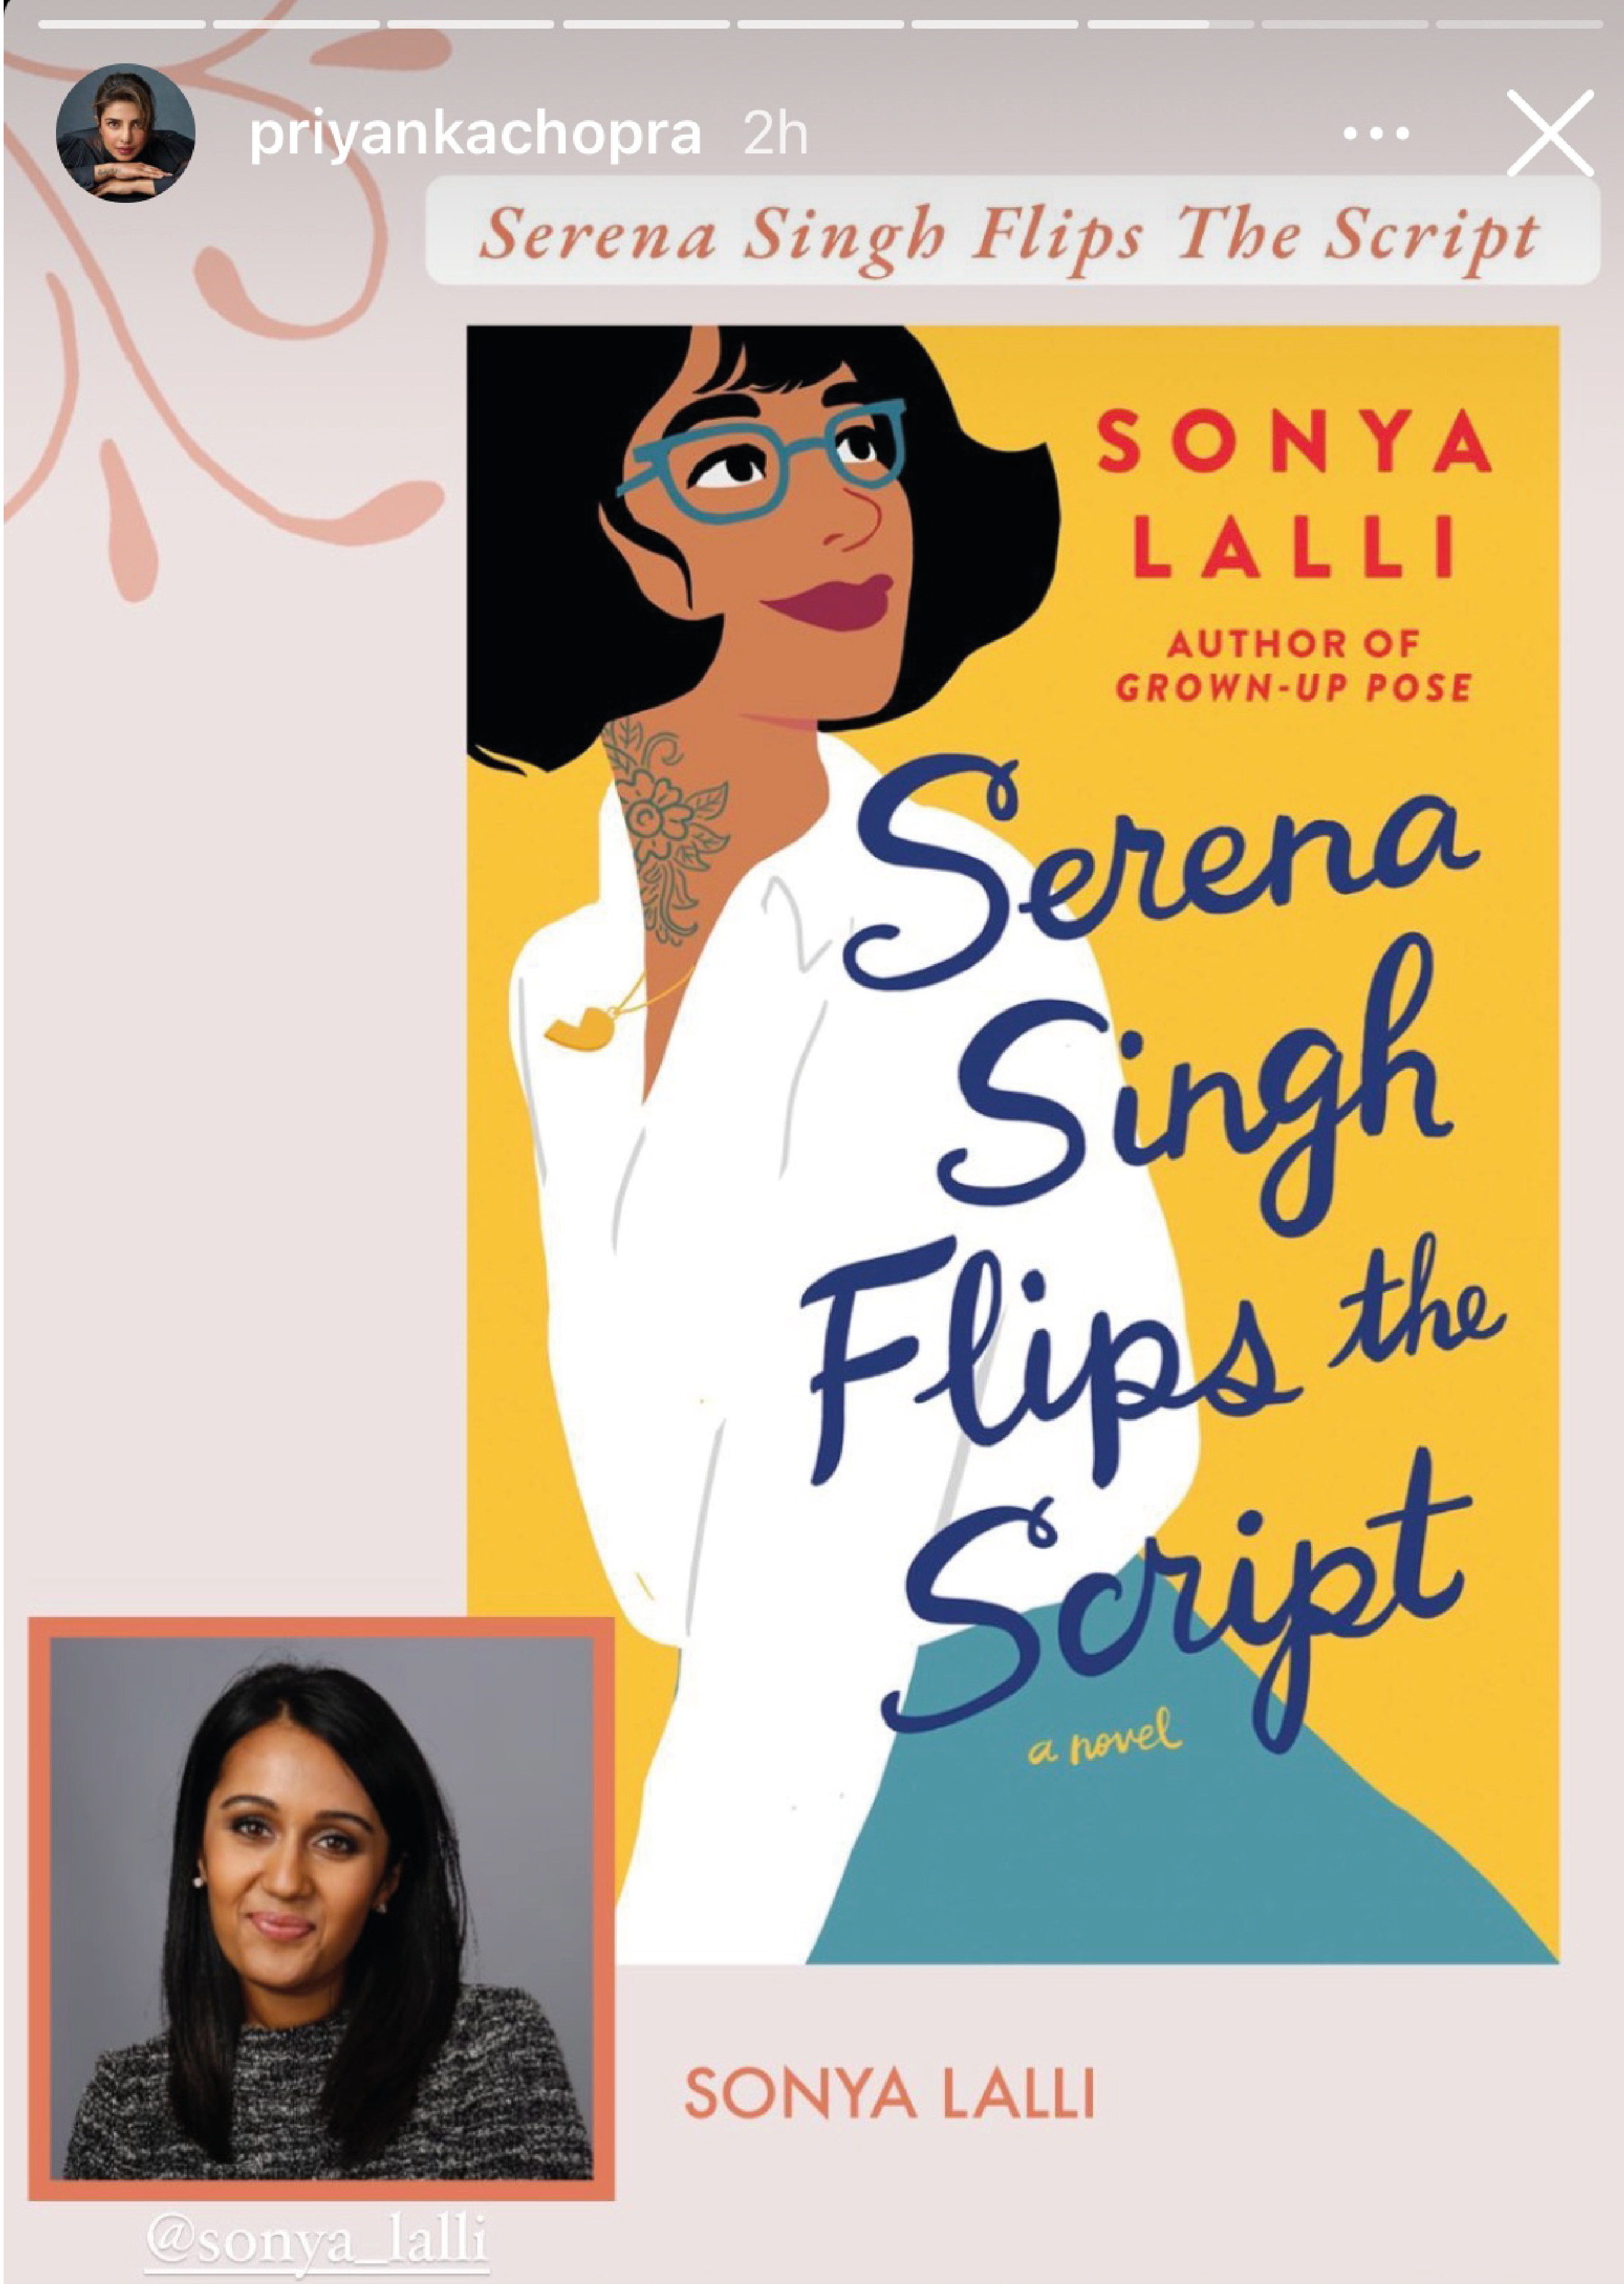 Priyanka Chopra recommends Serena Singh Flips the Script